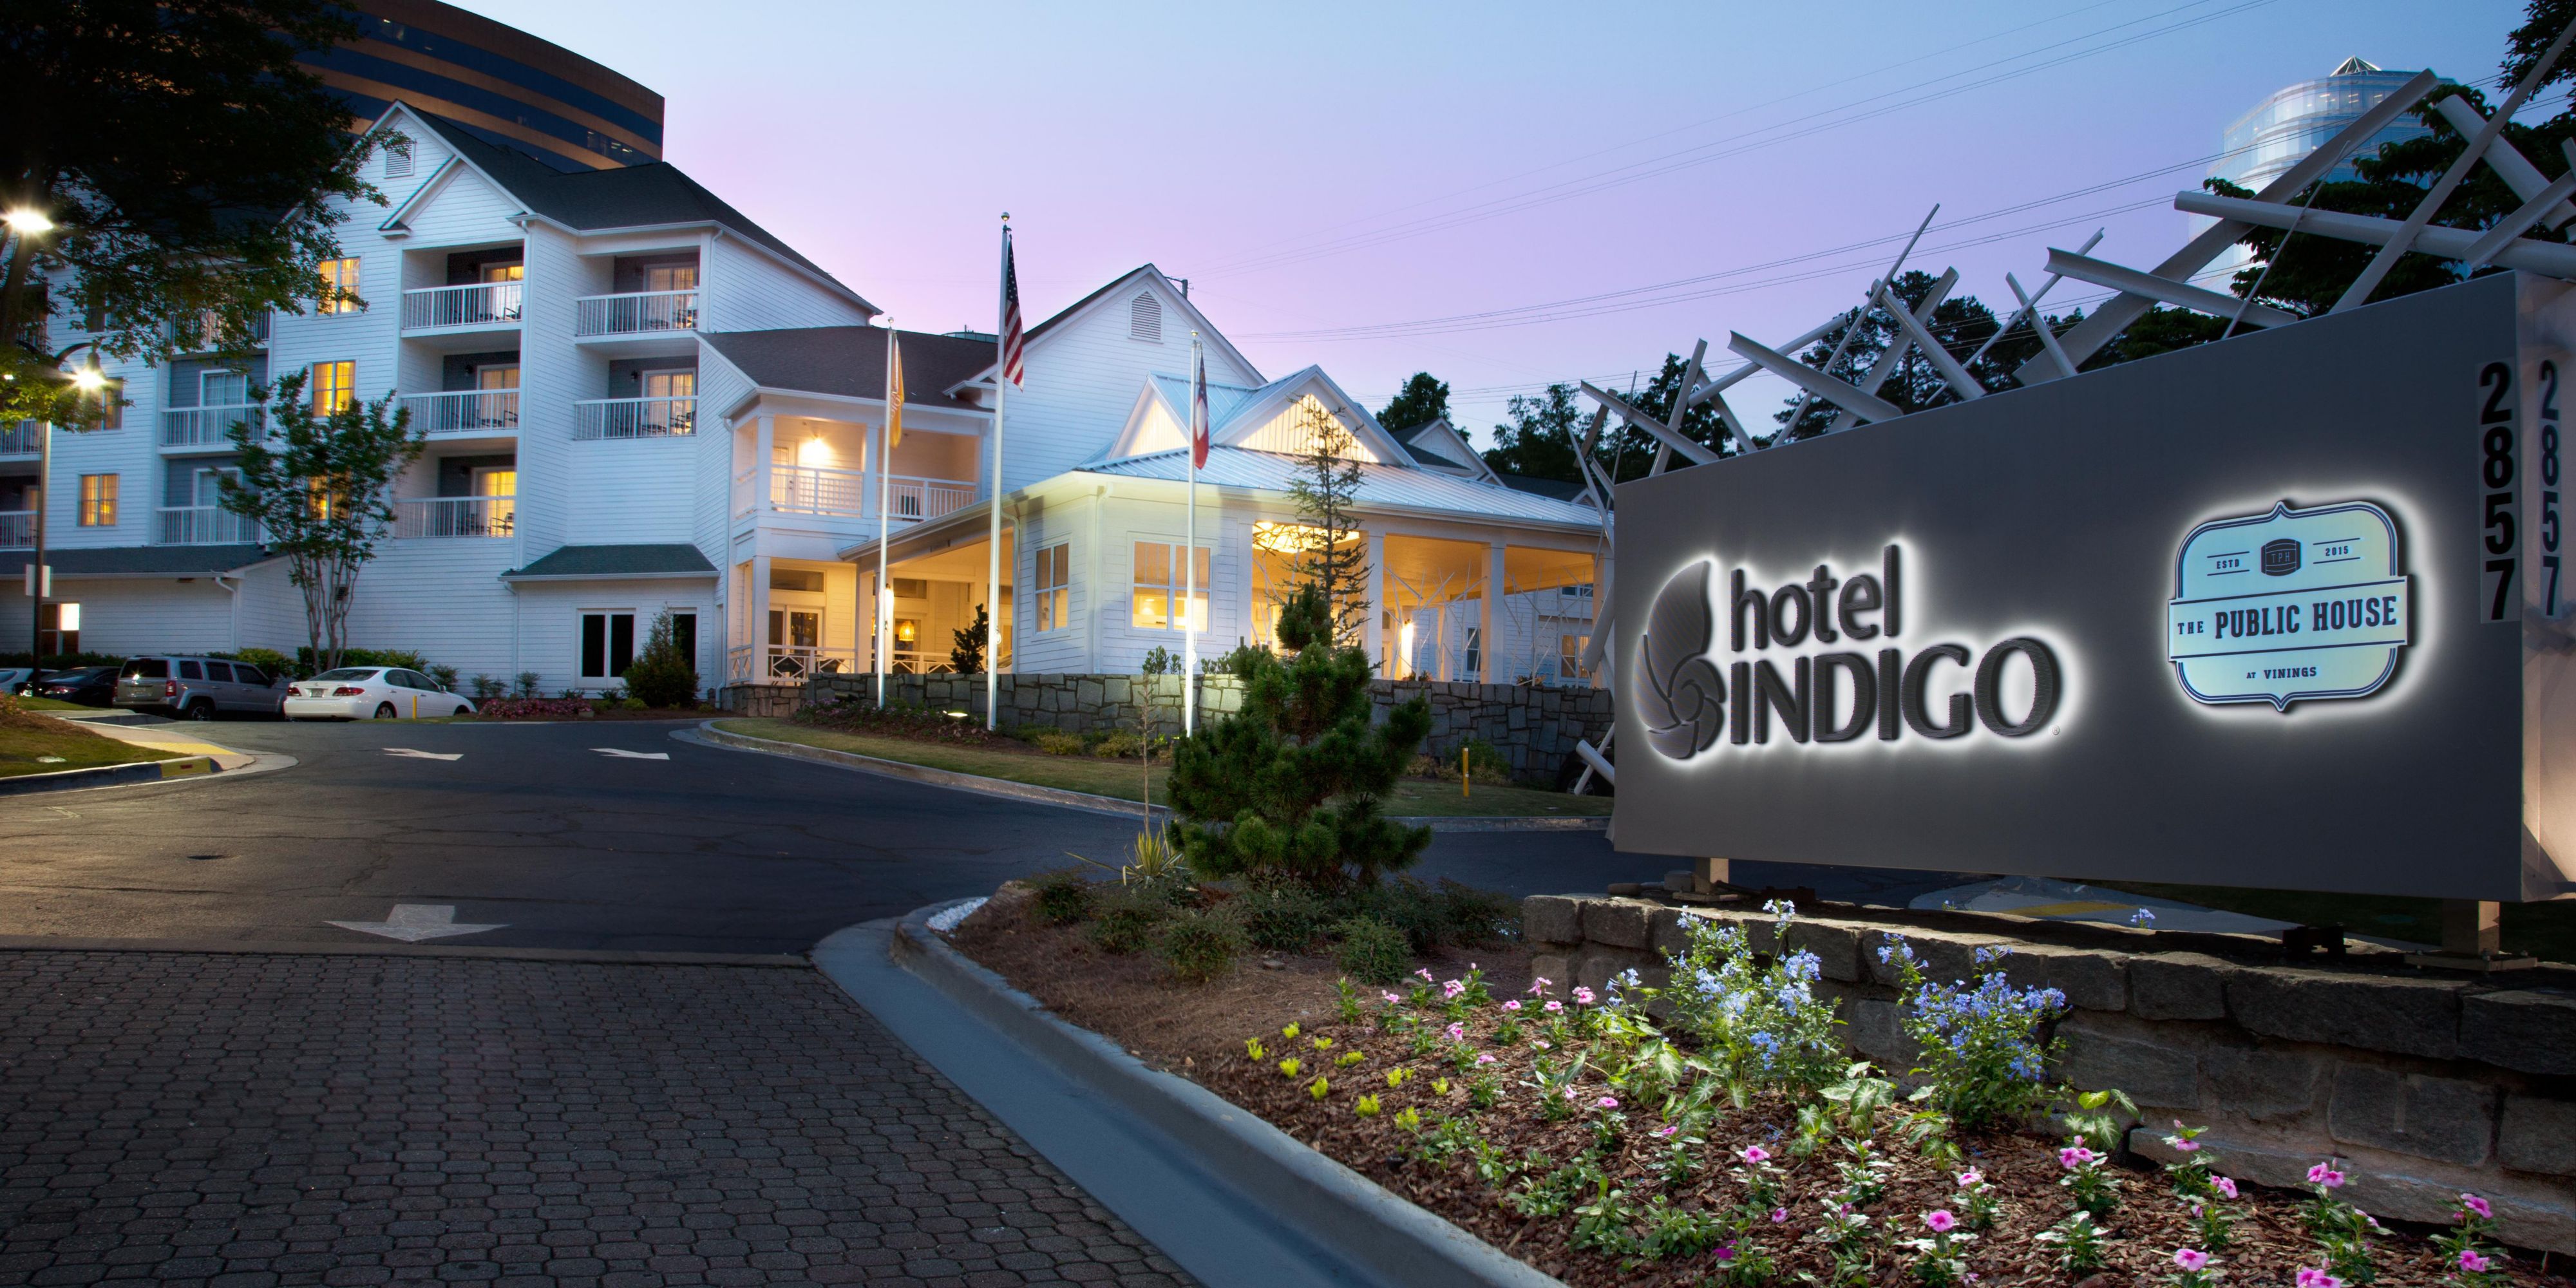 Hotel Indigo Atlanta 4472185888 2x1